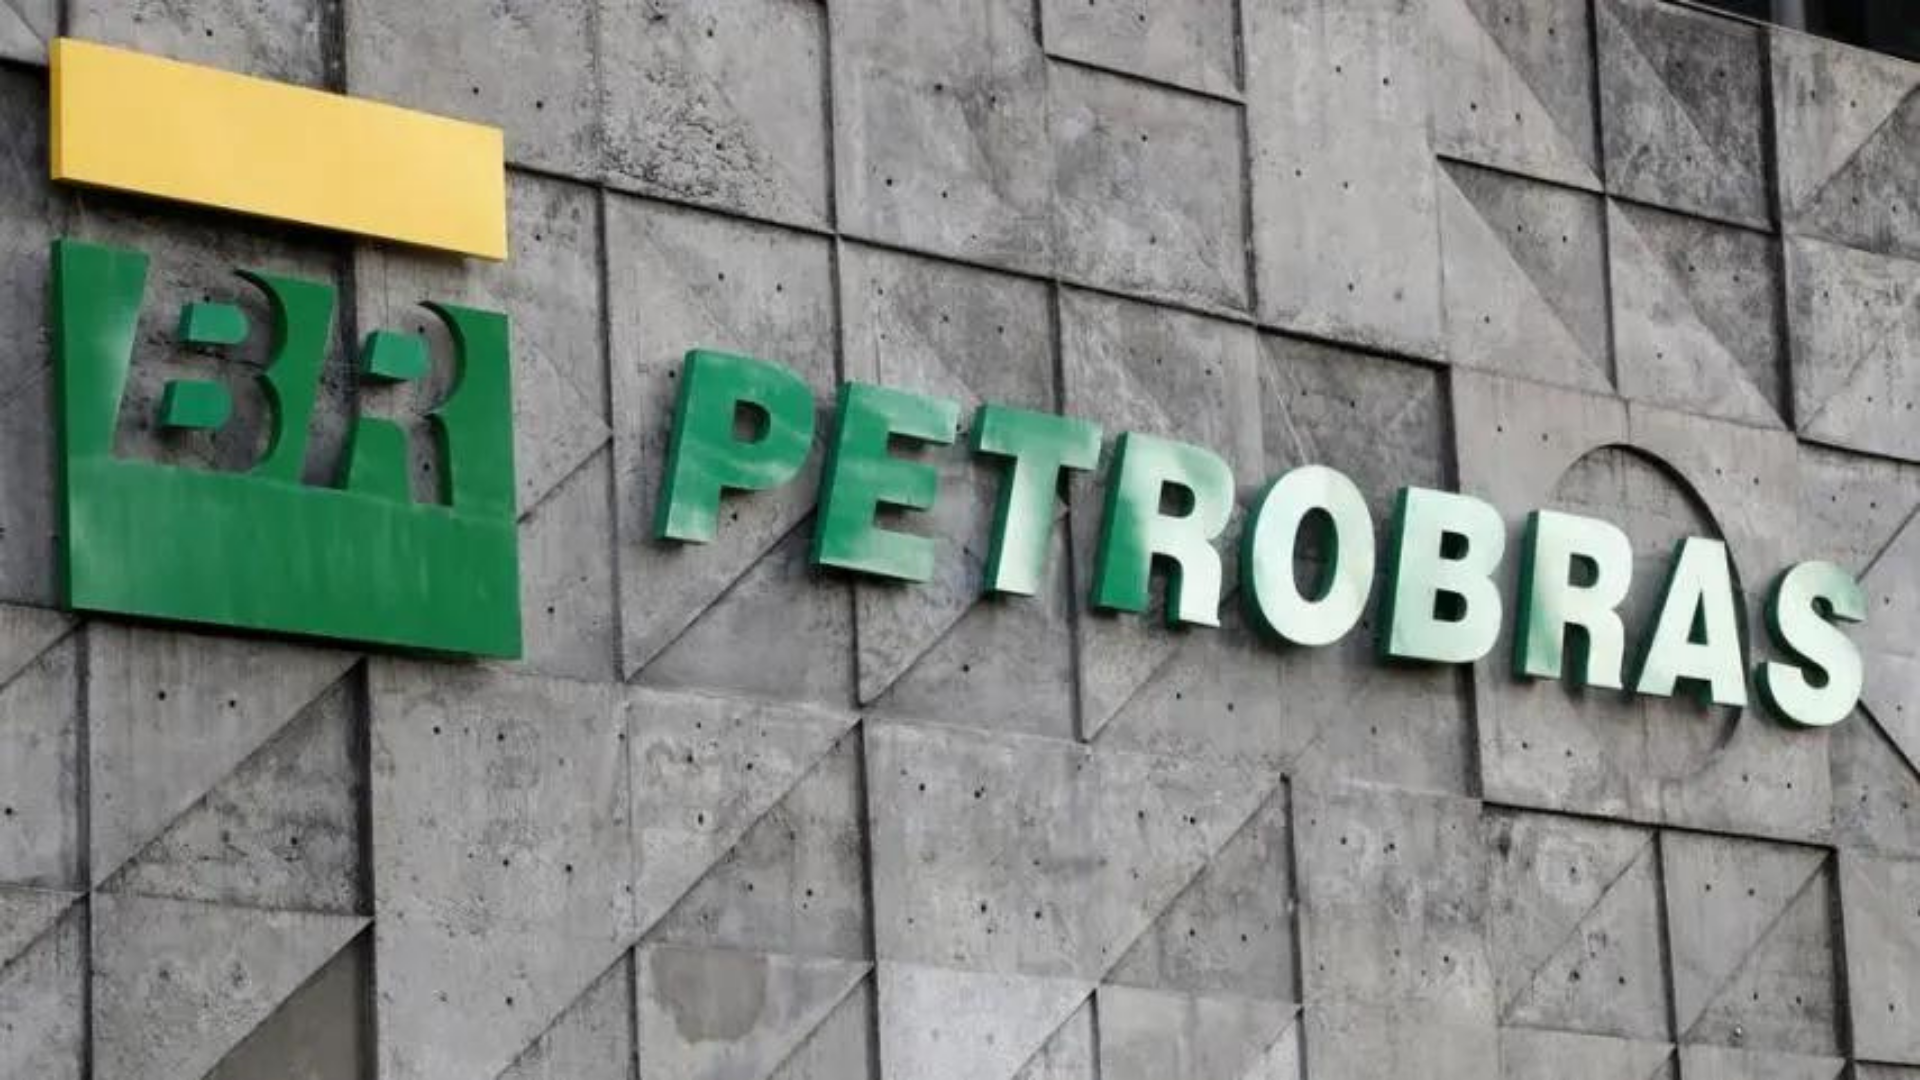 Petrobrás tem lucro recorde. Foto da facha da empresa, nome na parede nas cores verde e amarelo.